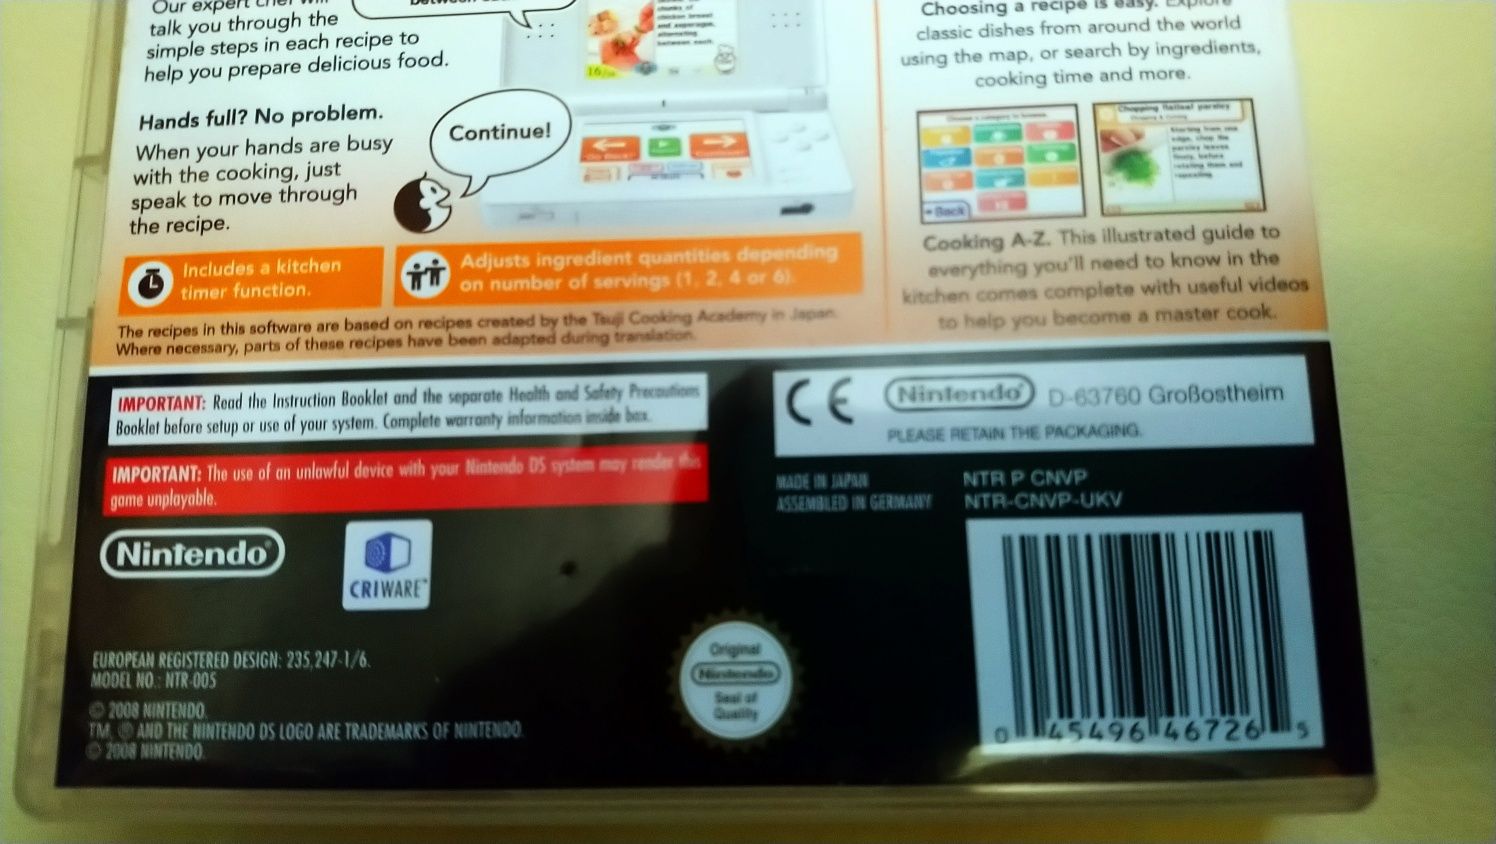 Nintendo DS Coocing Guide